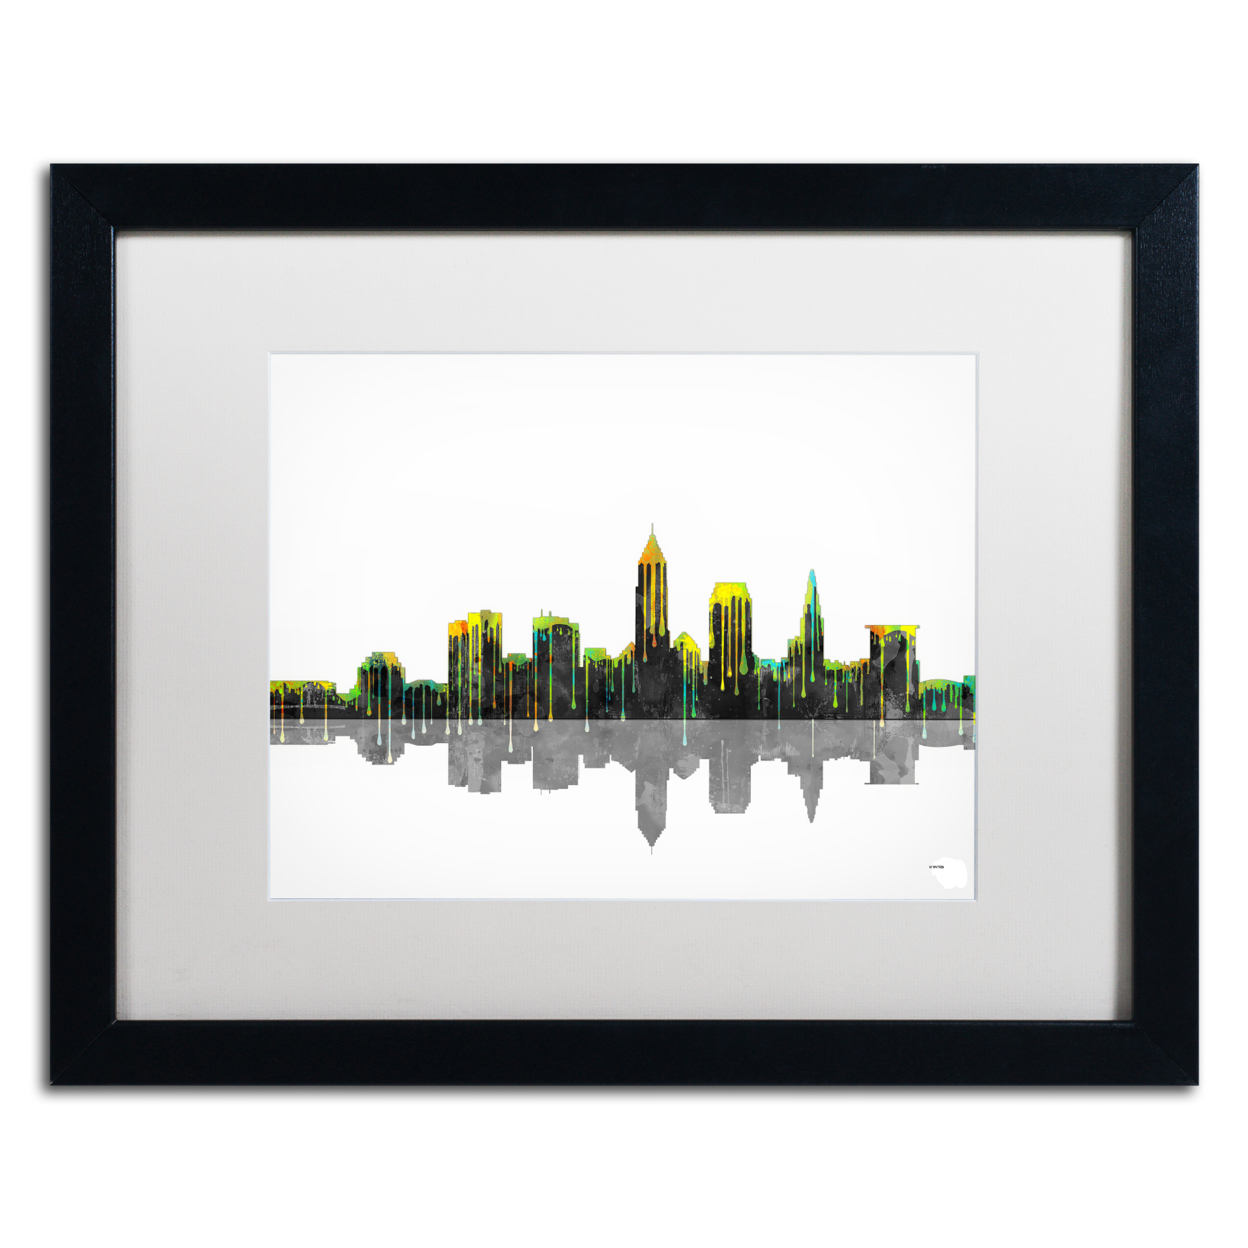 Marlene Watson 'Cleveland Ohio Skyline' Black Wooden Framed Art 18 X 22 Inches